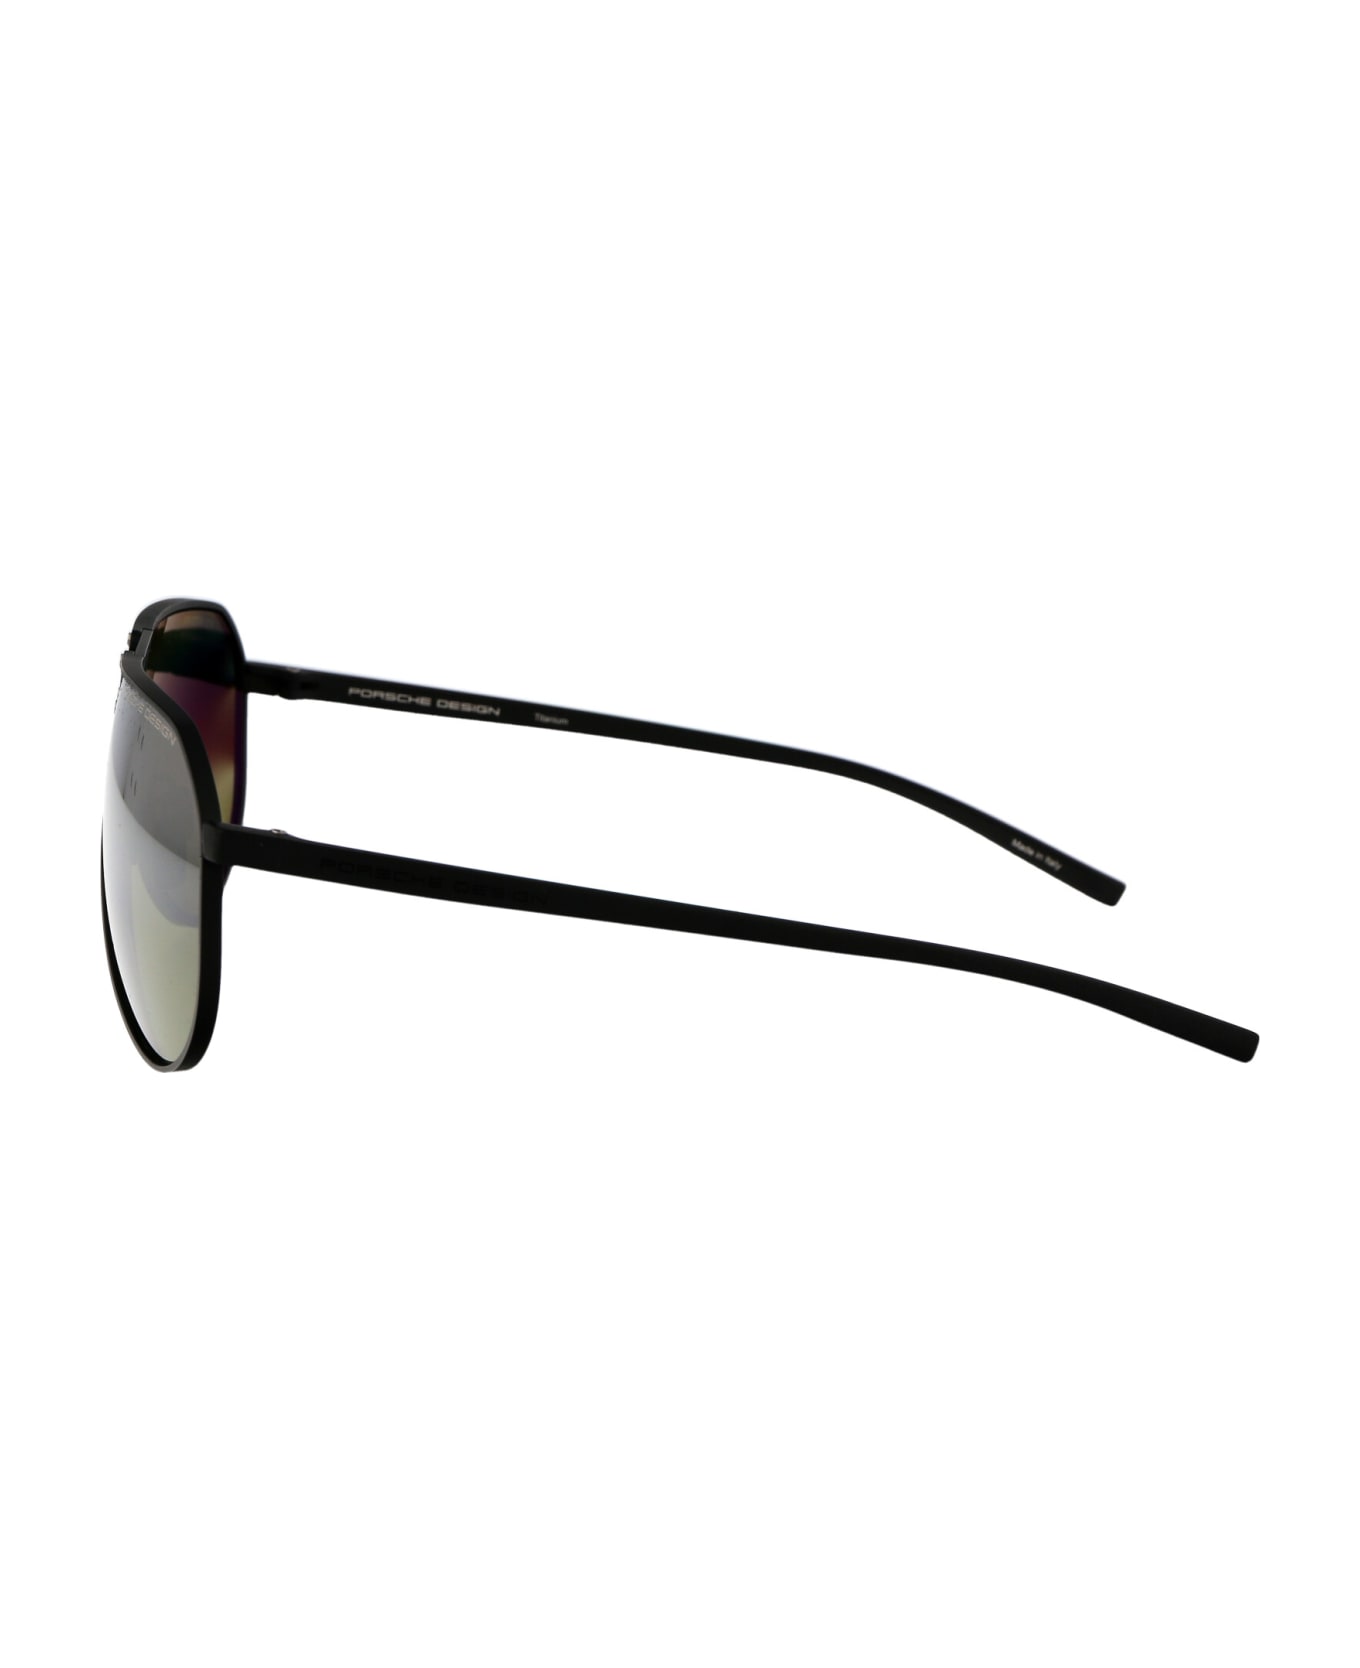 Porsche Design P8938 Sunglasses - A417 BLACK サングラス